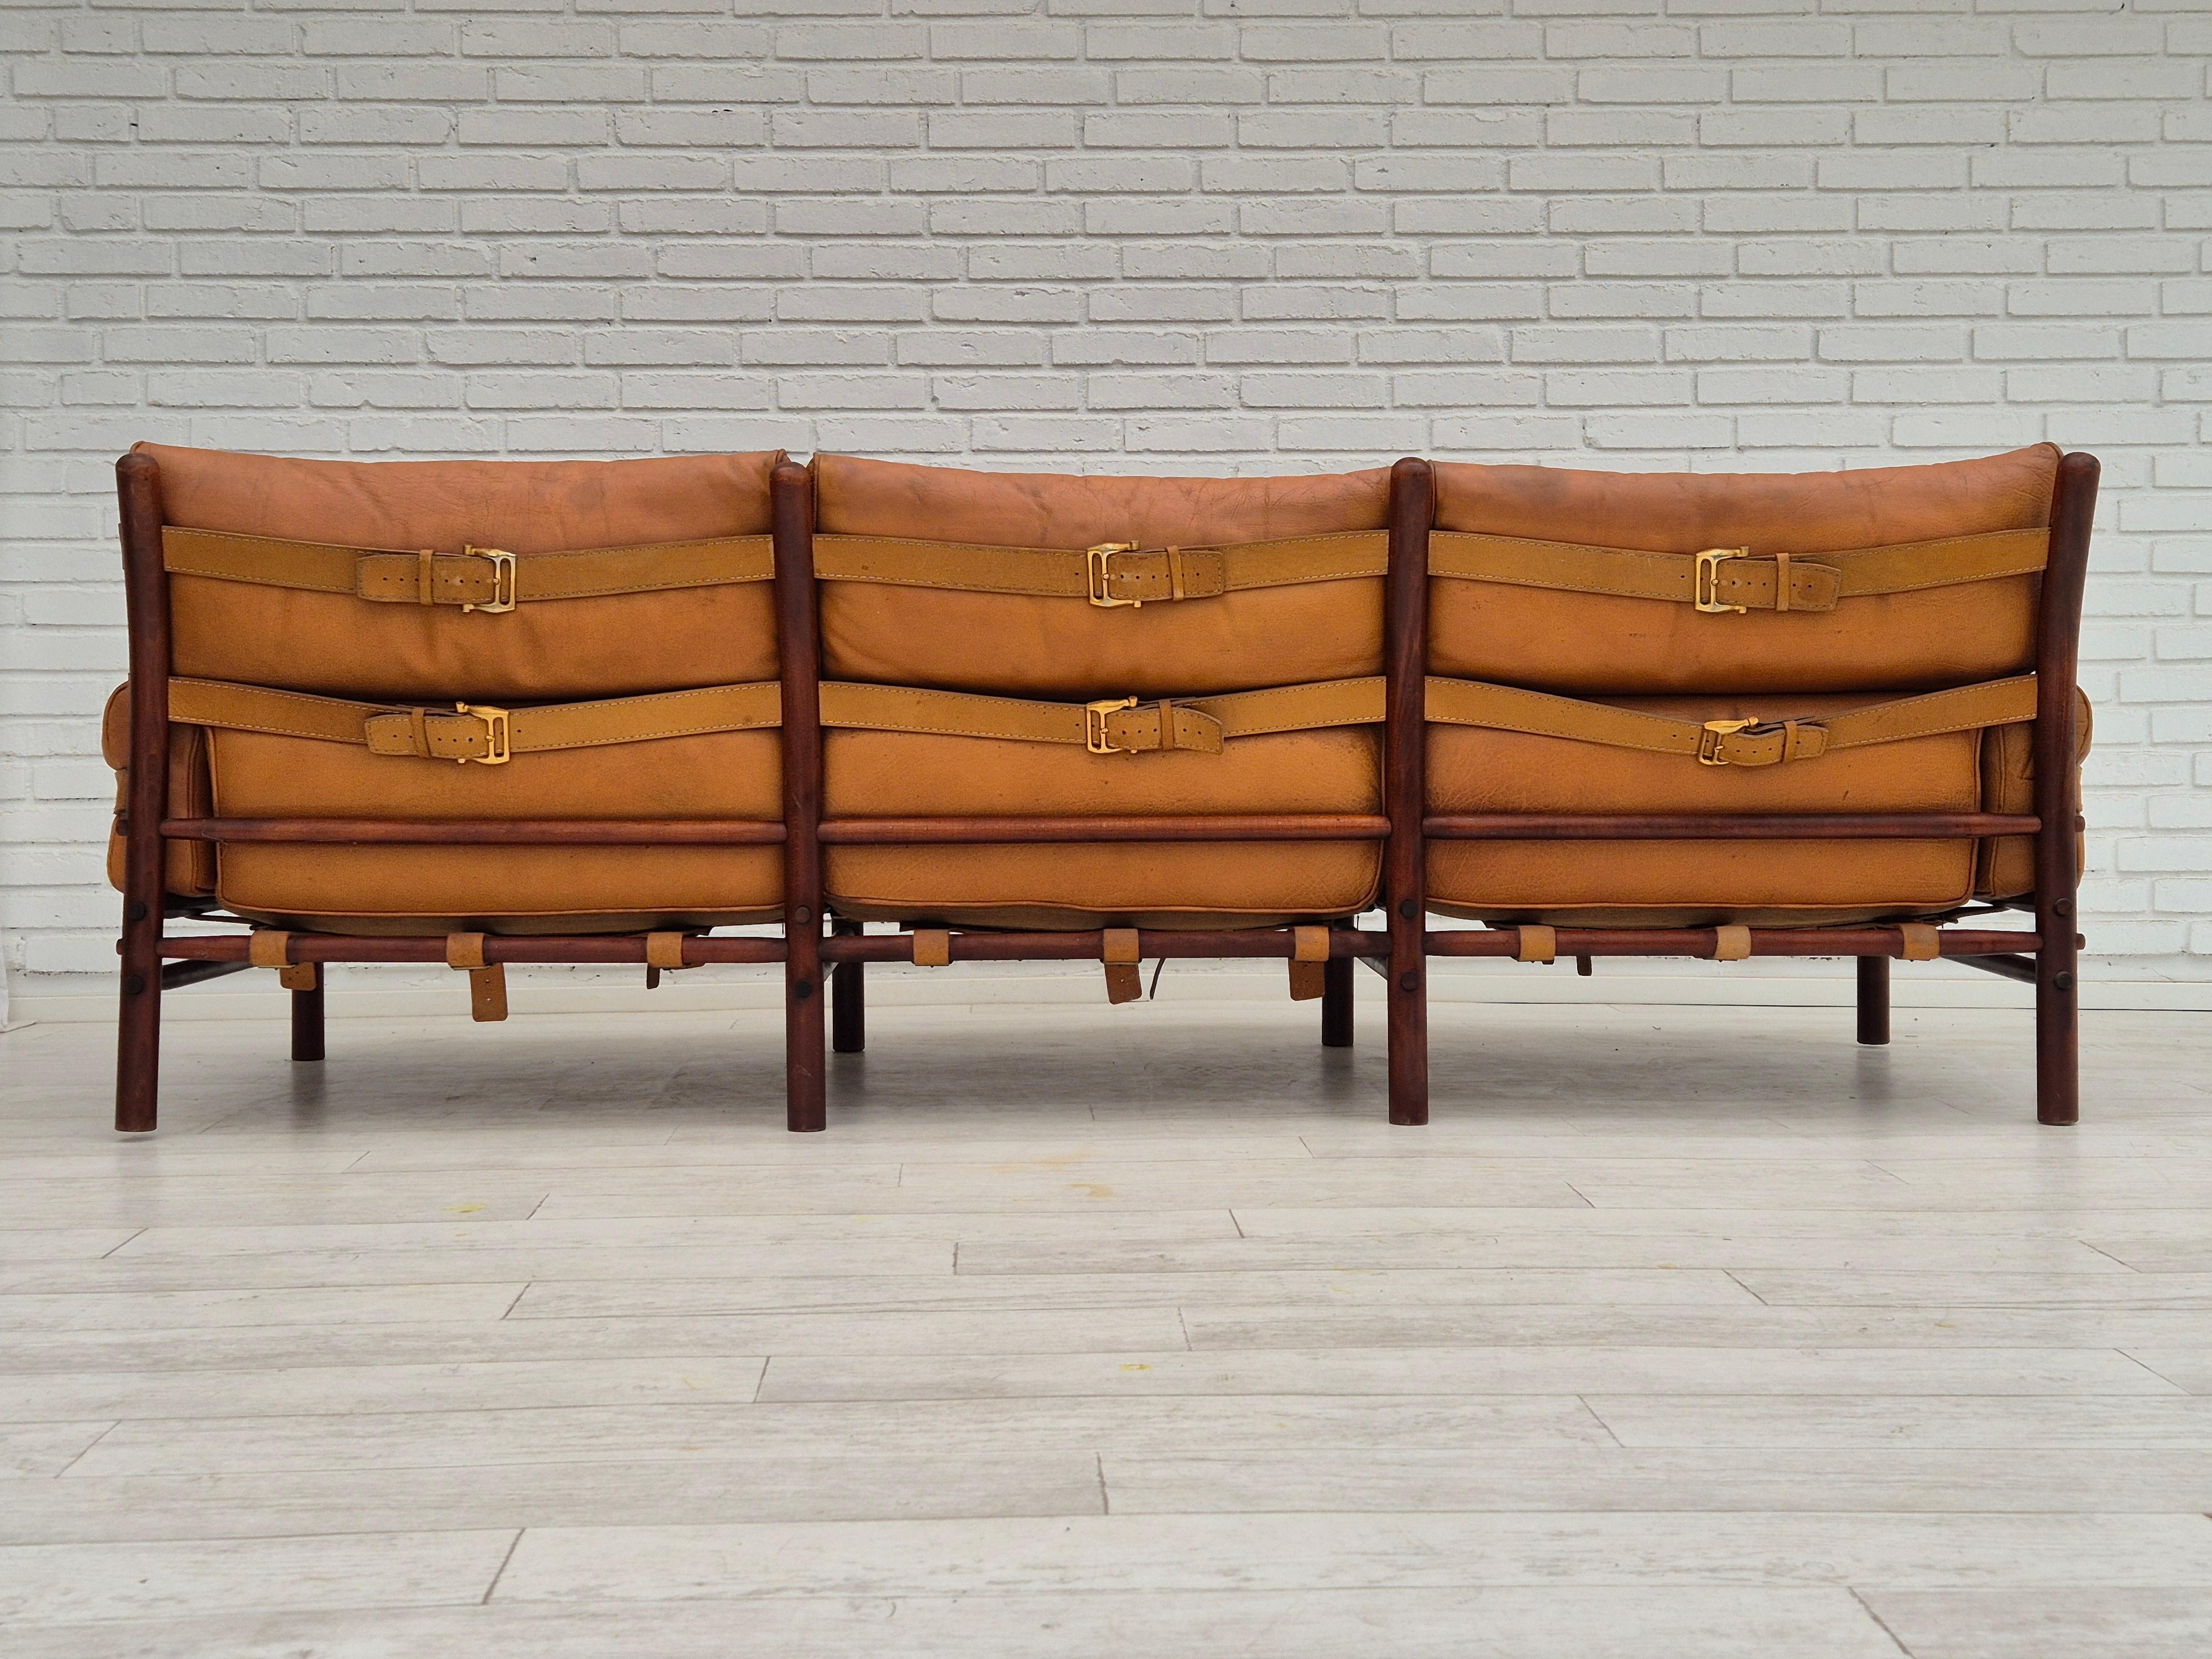 1960s, Scandinavian design by Arne Norell, sofa, model 